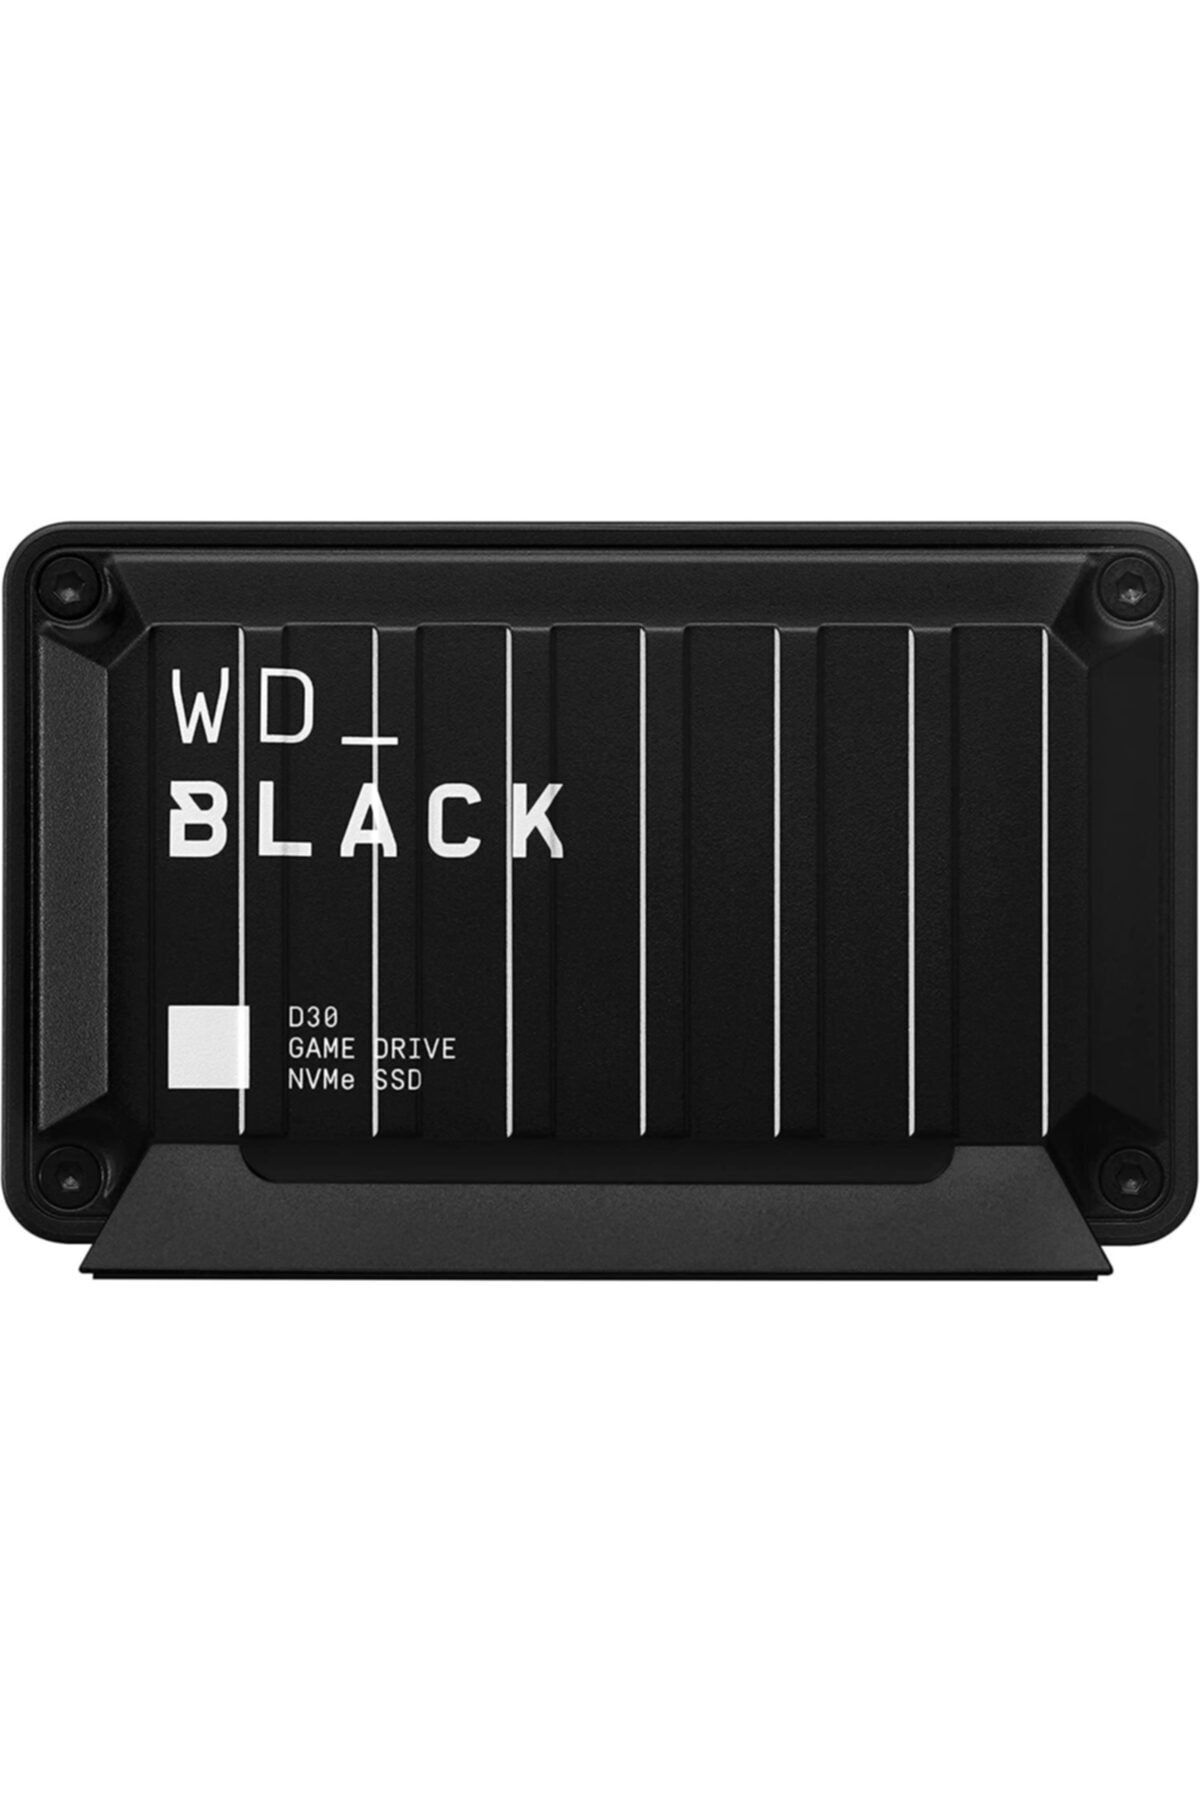 WD Black D30 1tb Batl0010bbk-wesn Game Drive Ssd Taşınabilir